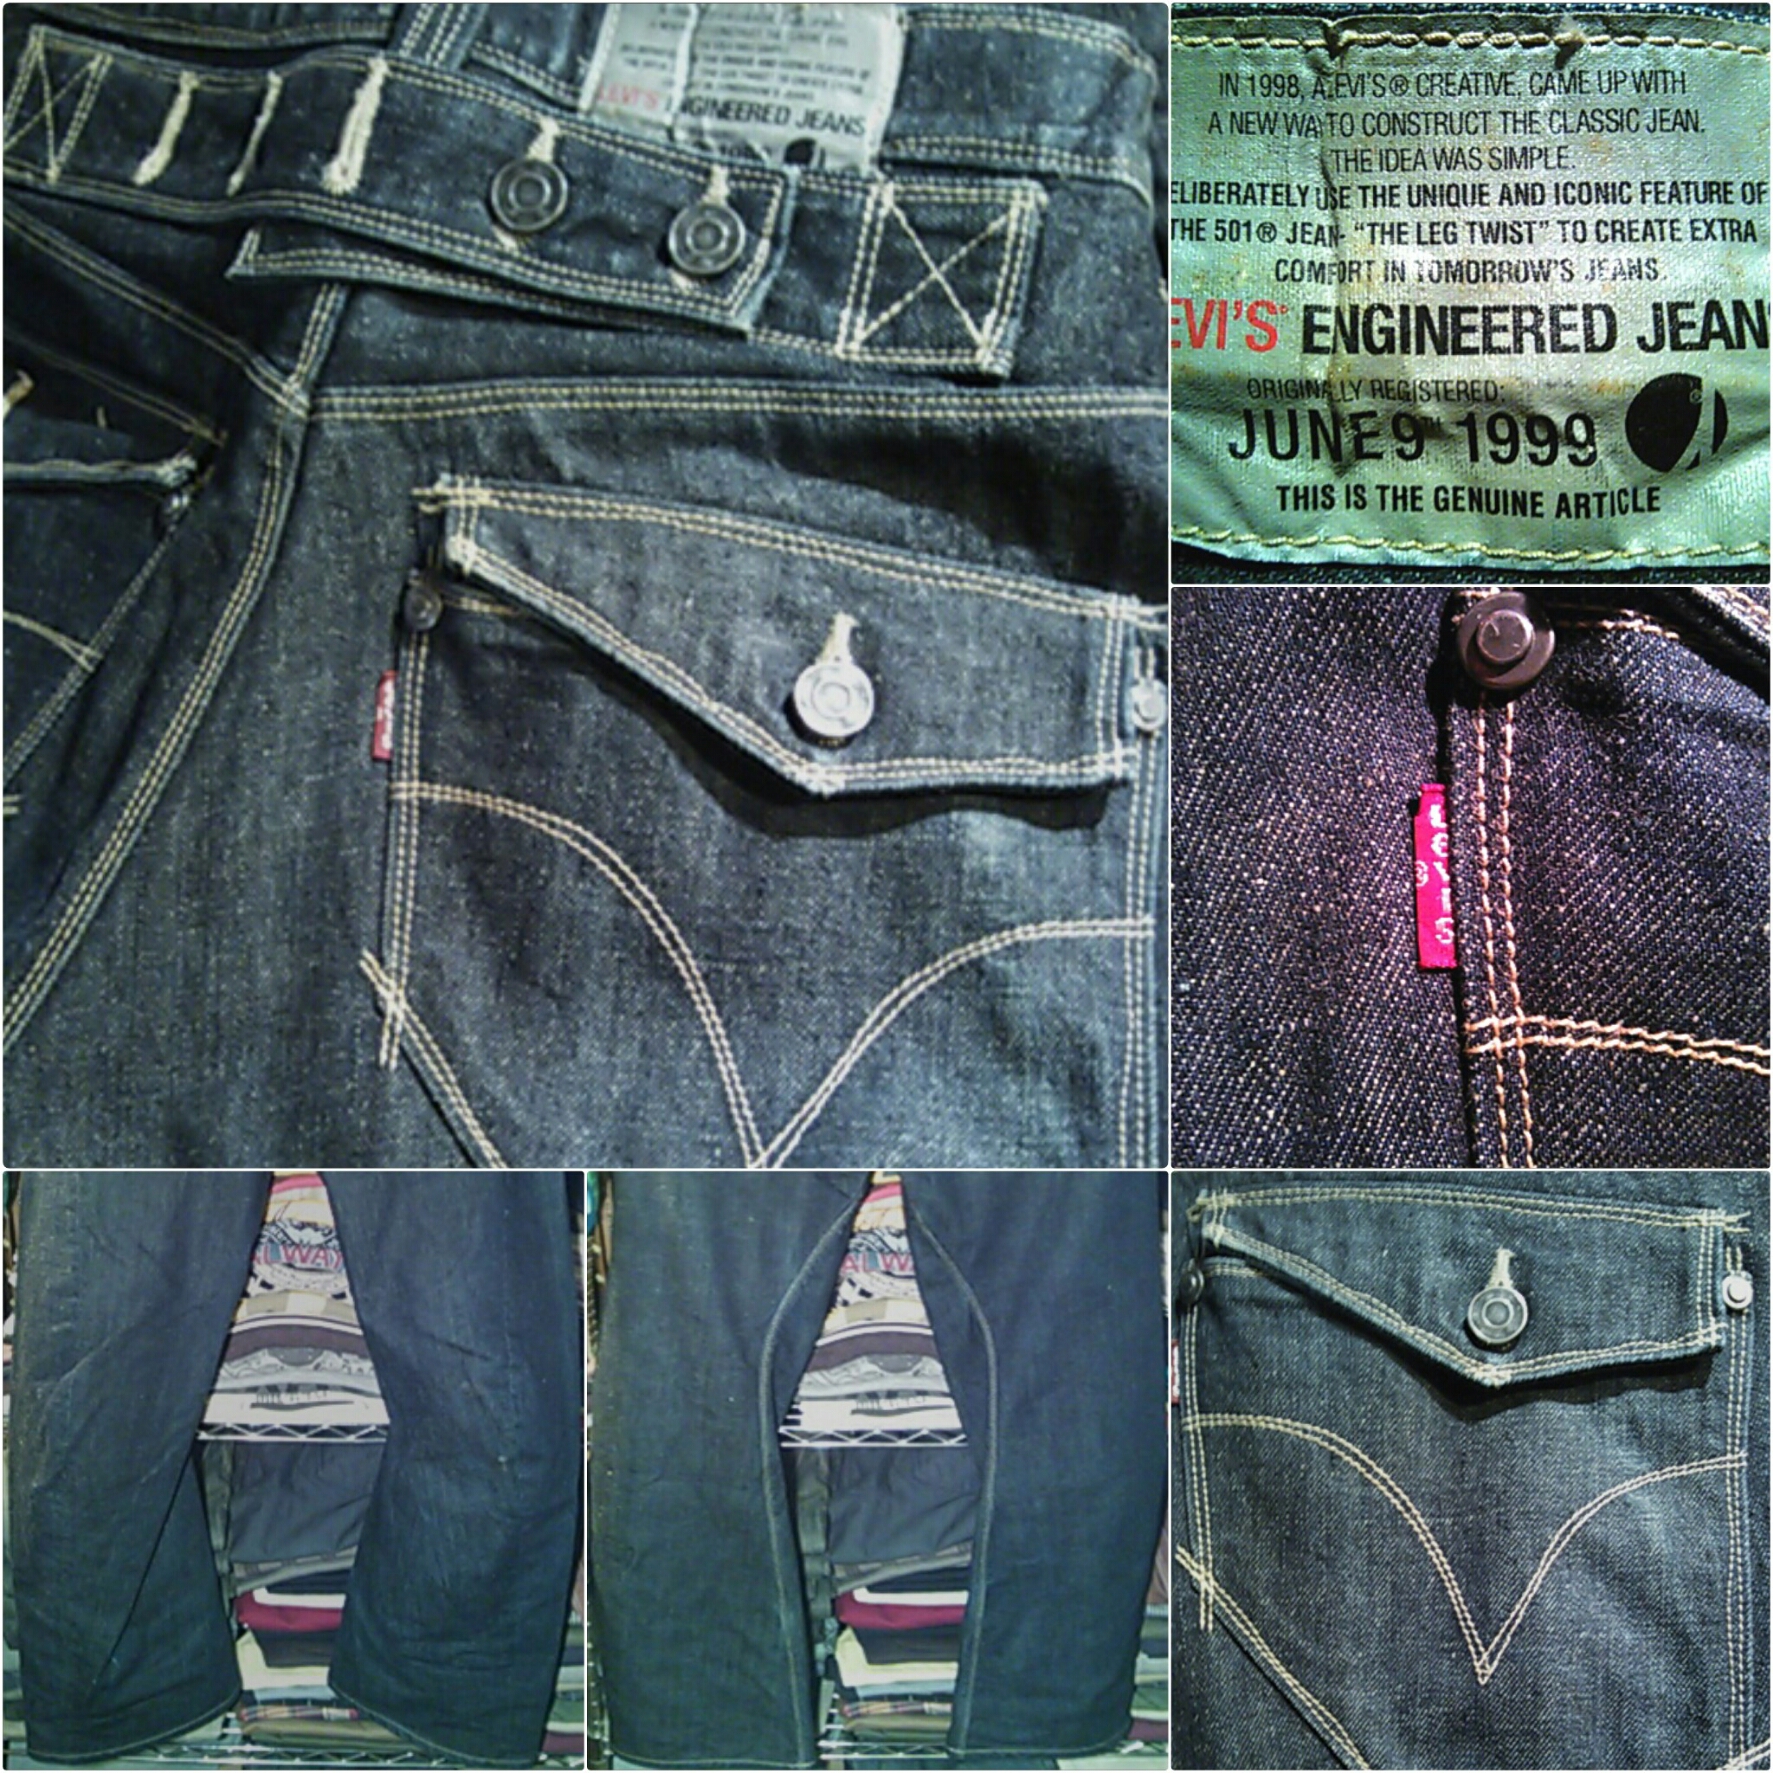 levi's engineered jeans june 9 1999